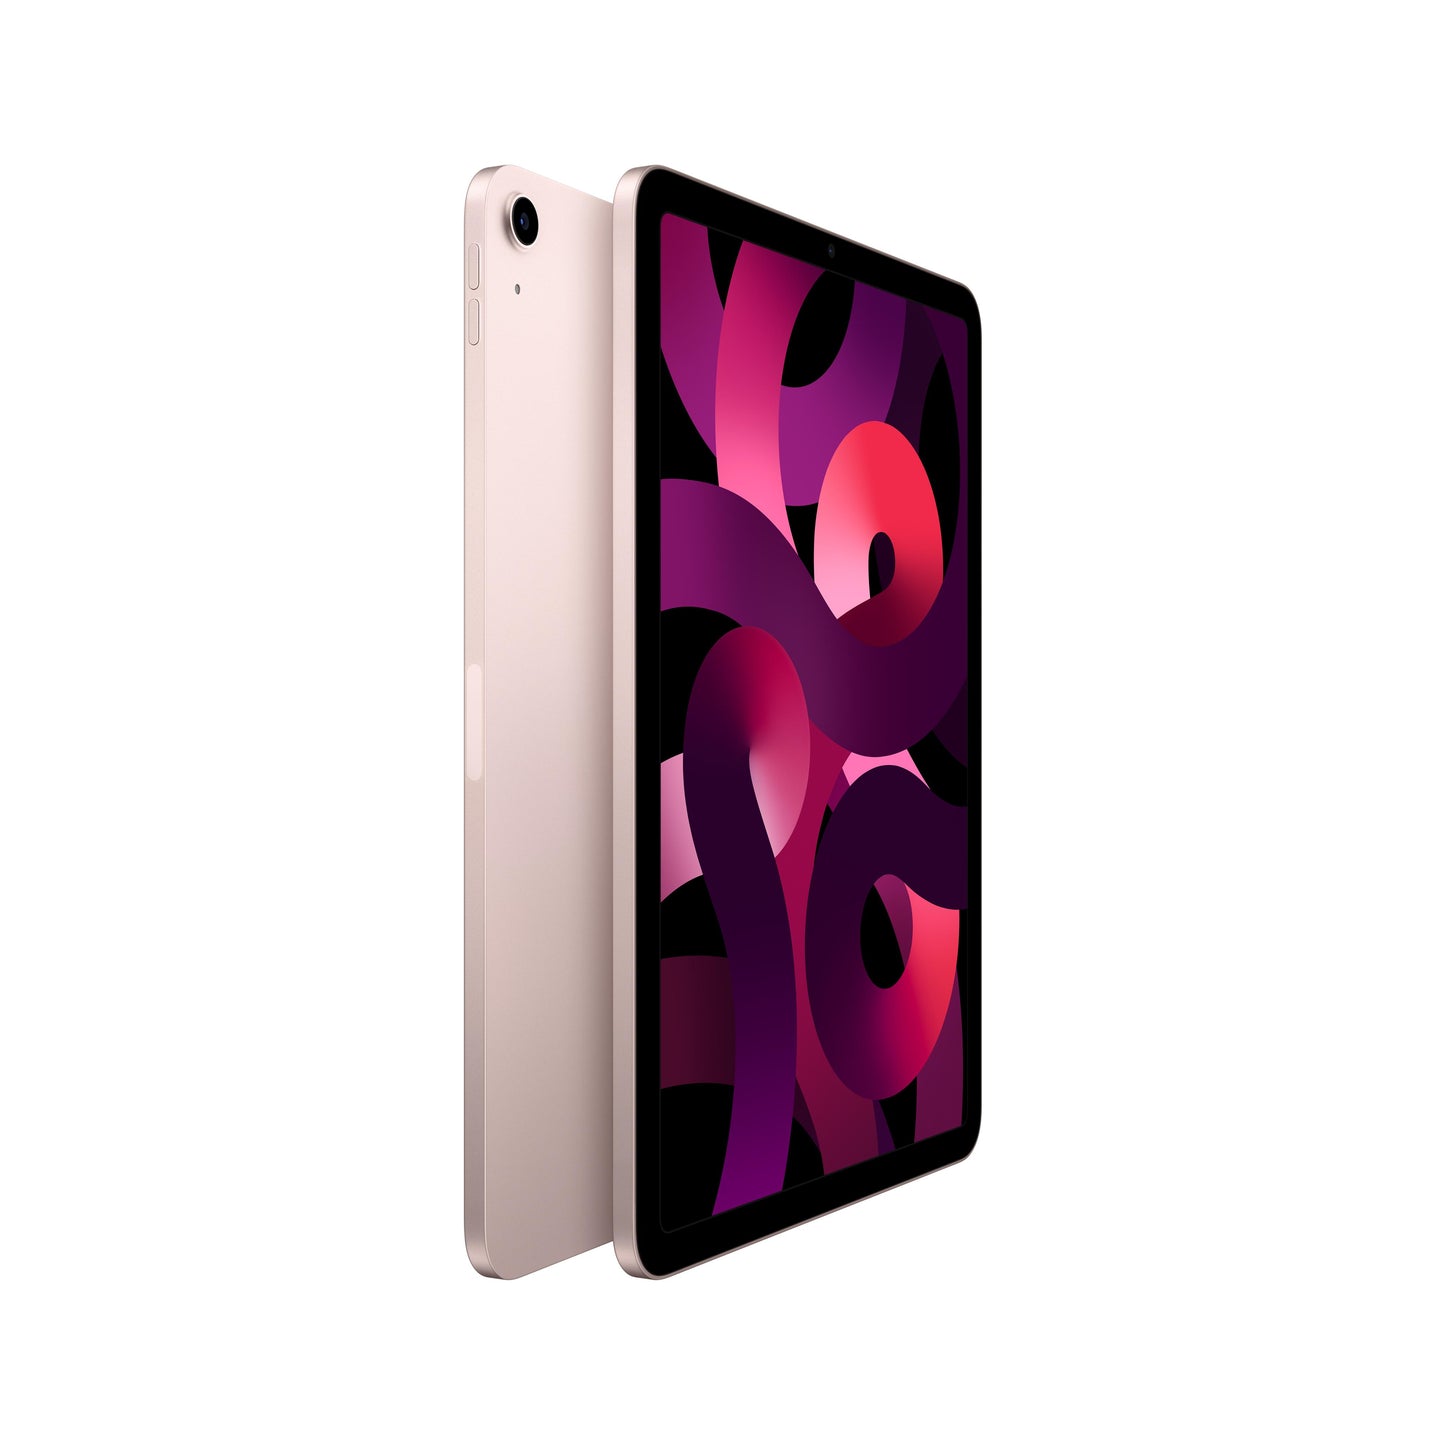 10.9-inch iPad Air Wi-Fi 256GB - Pink